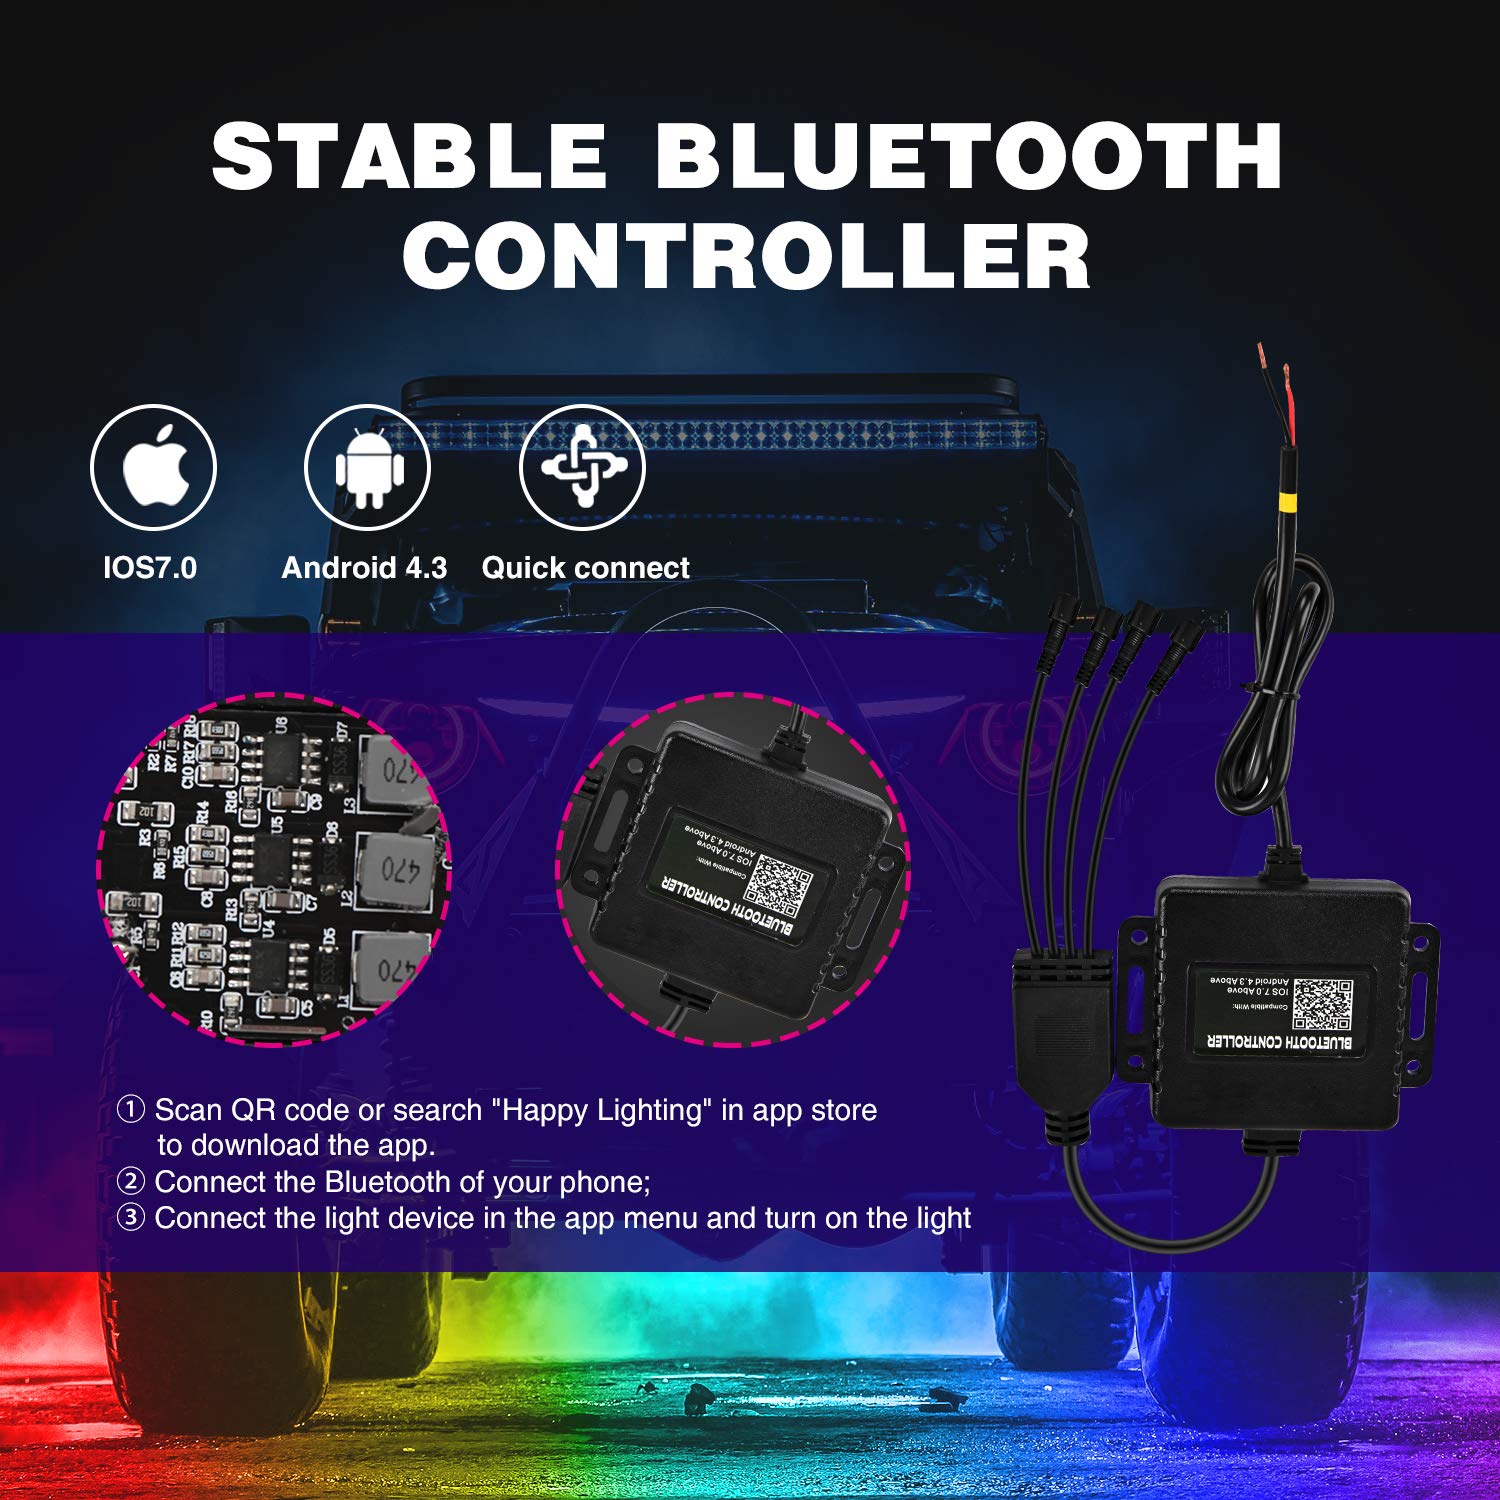 Pyle Marine ATV Powered Speakers 4.0 Wireless Bluetooth, 800 Watt & Nilight RGB LED Rock Lights Kit, 4 pods Underglow Multicolor Neon Light Pod